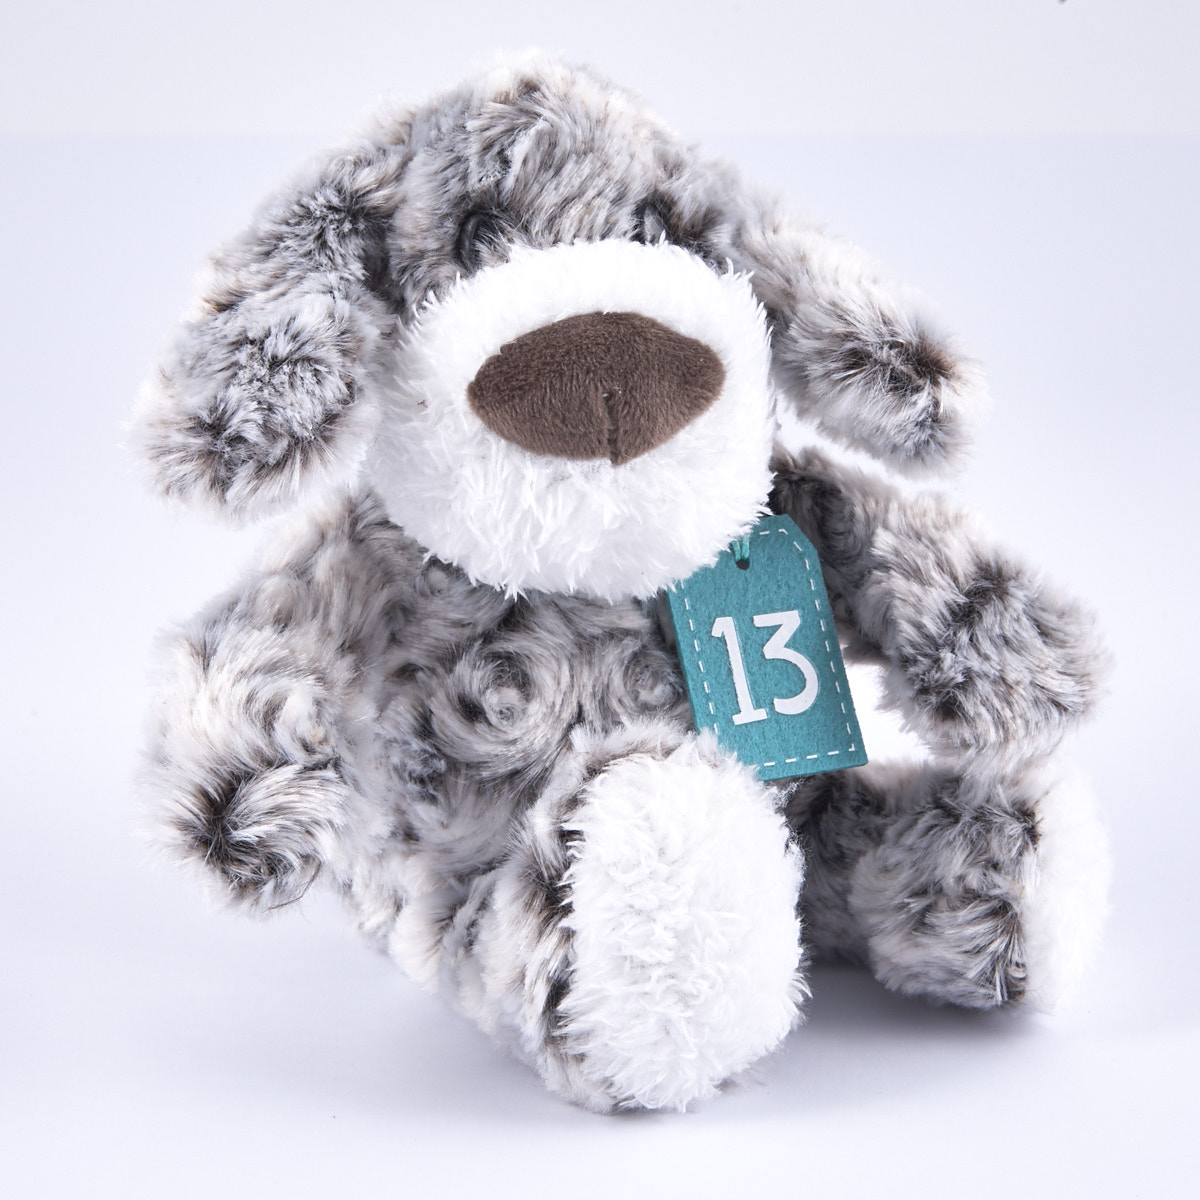 13th Birthday - Grey & White Dog In Gift Bag